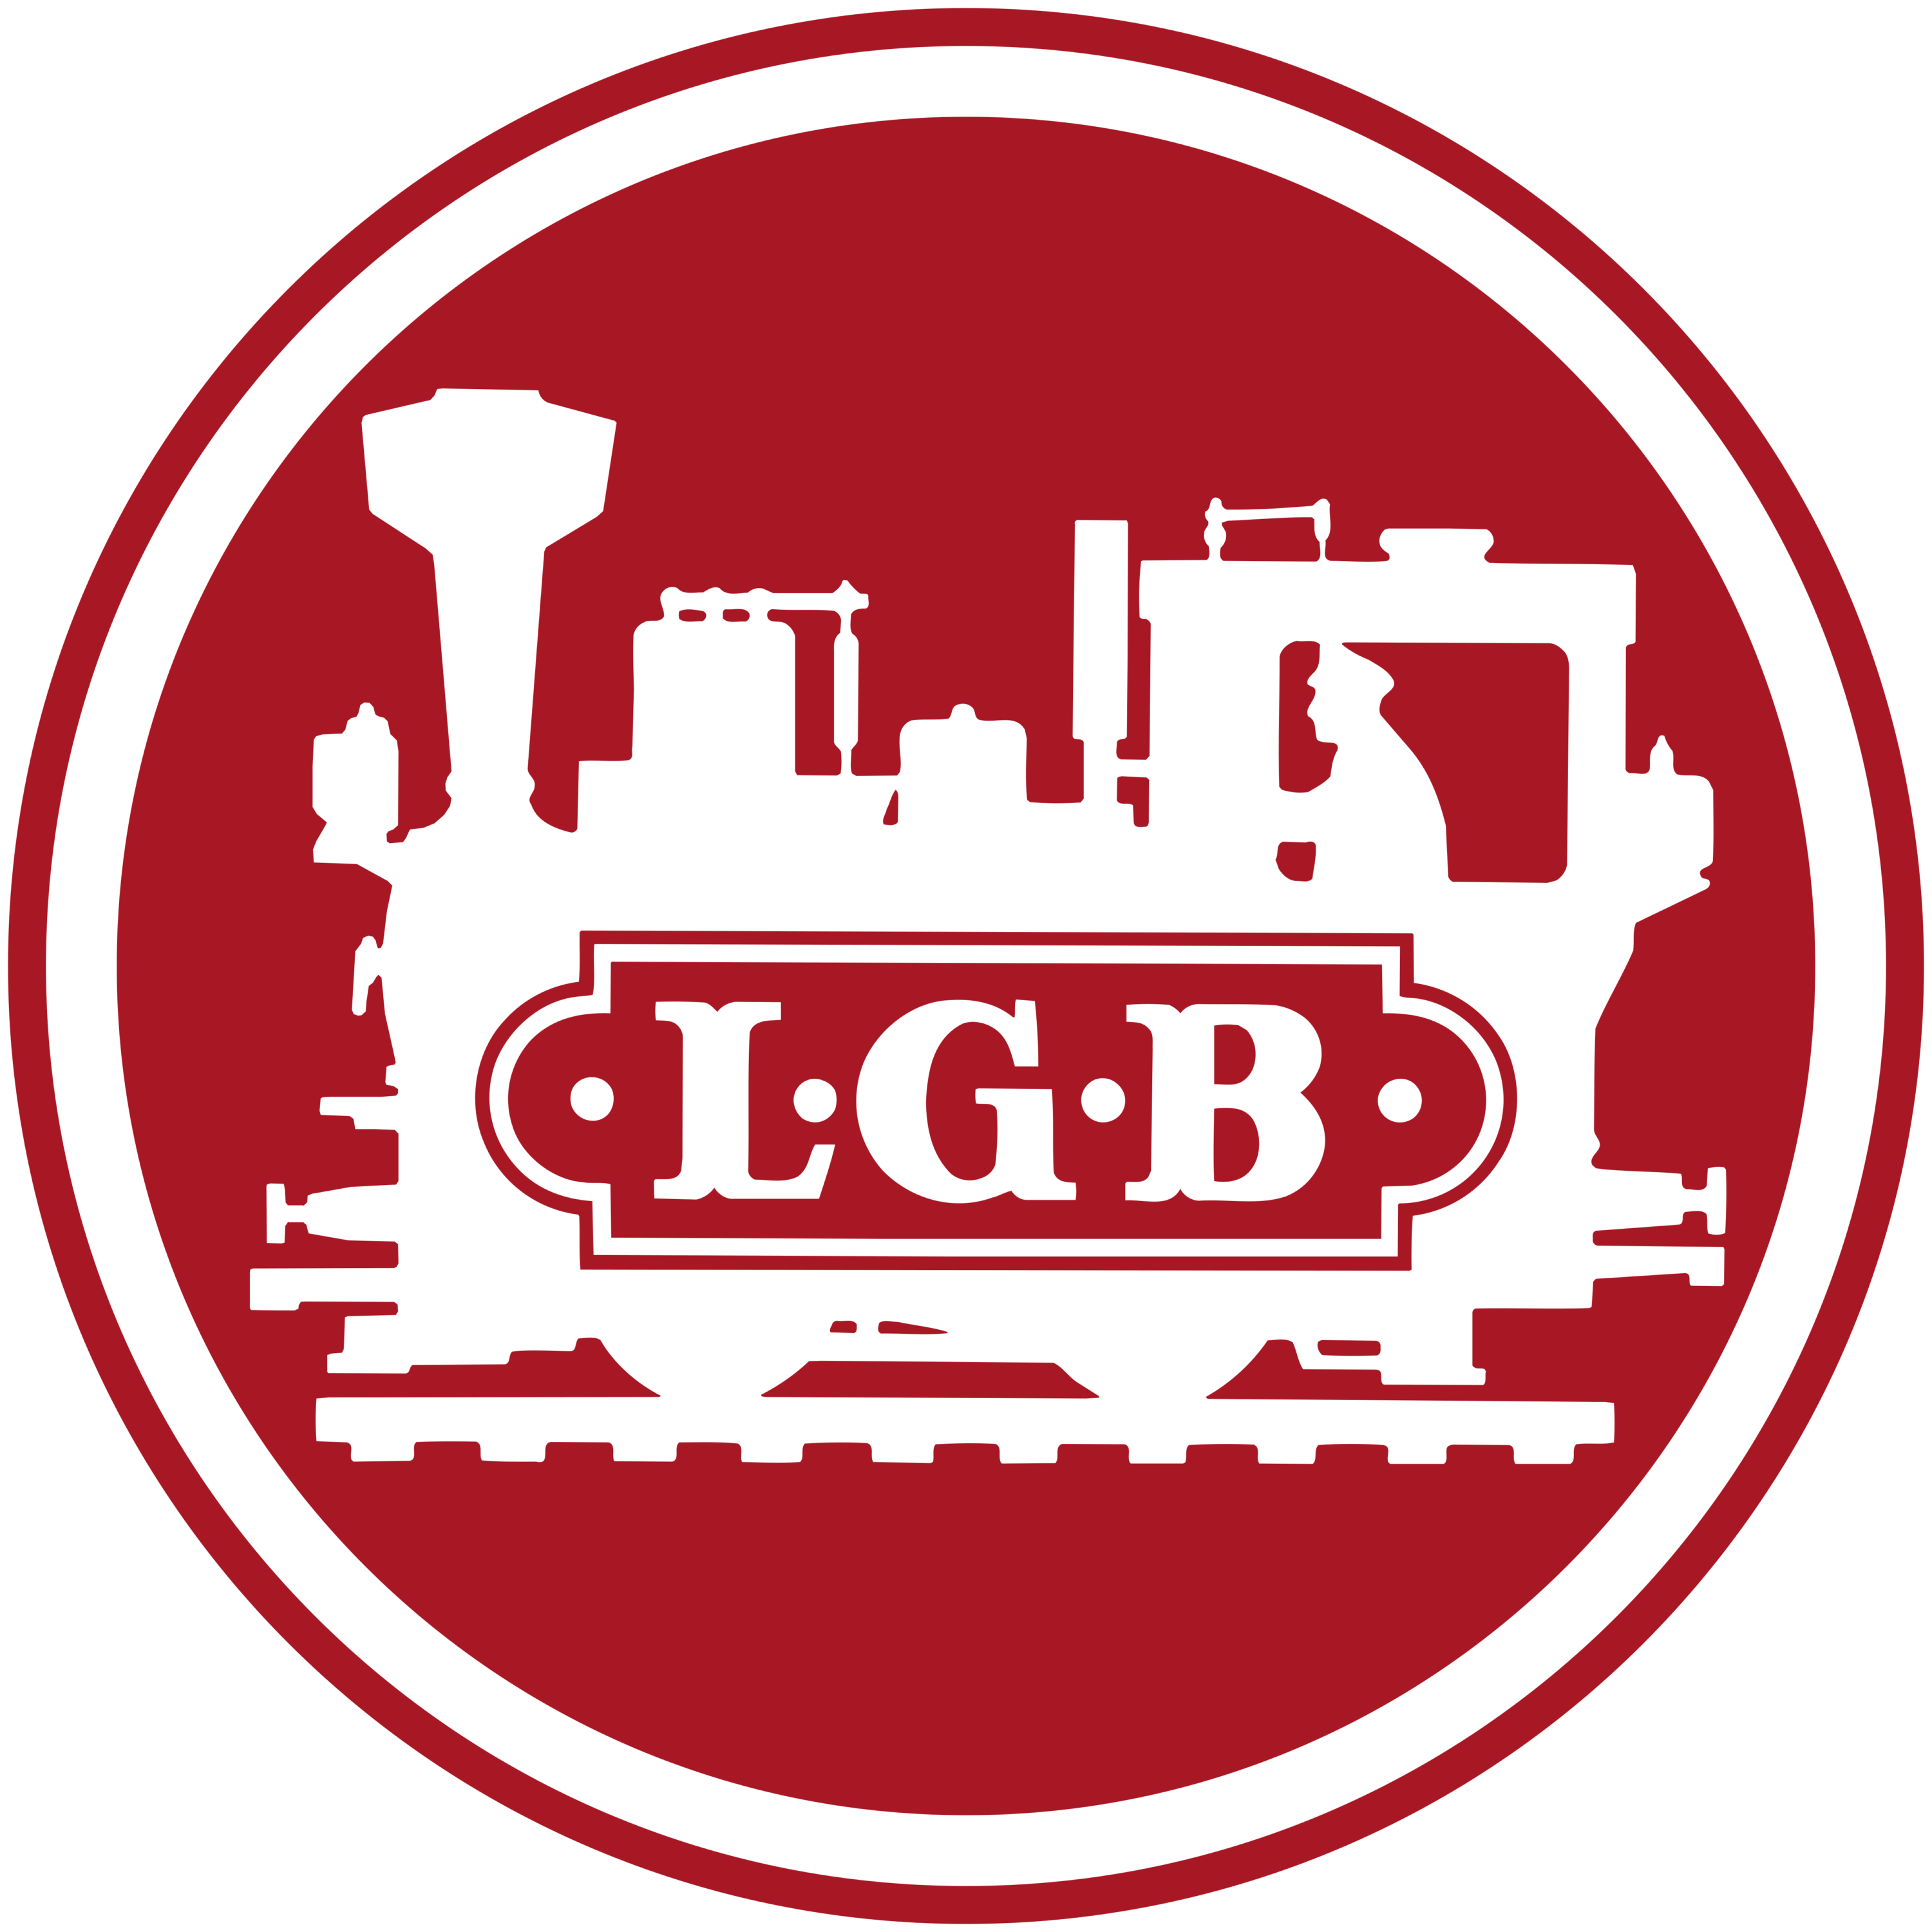 Long Beach Airport Logo